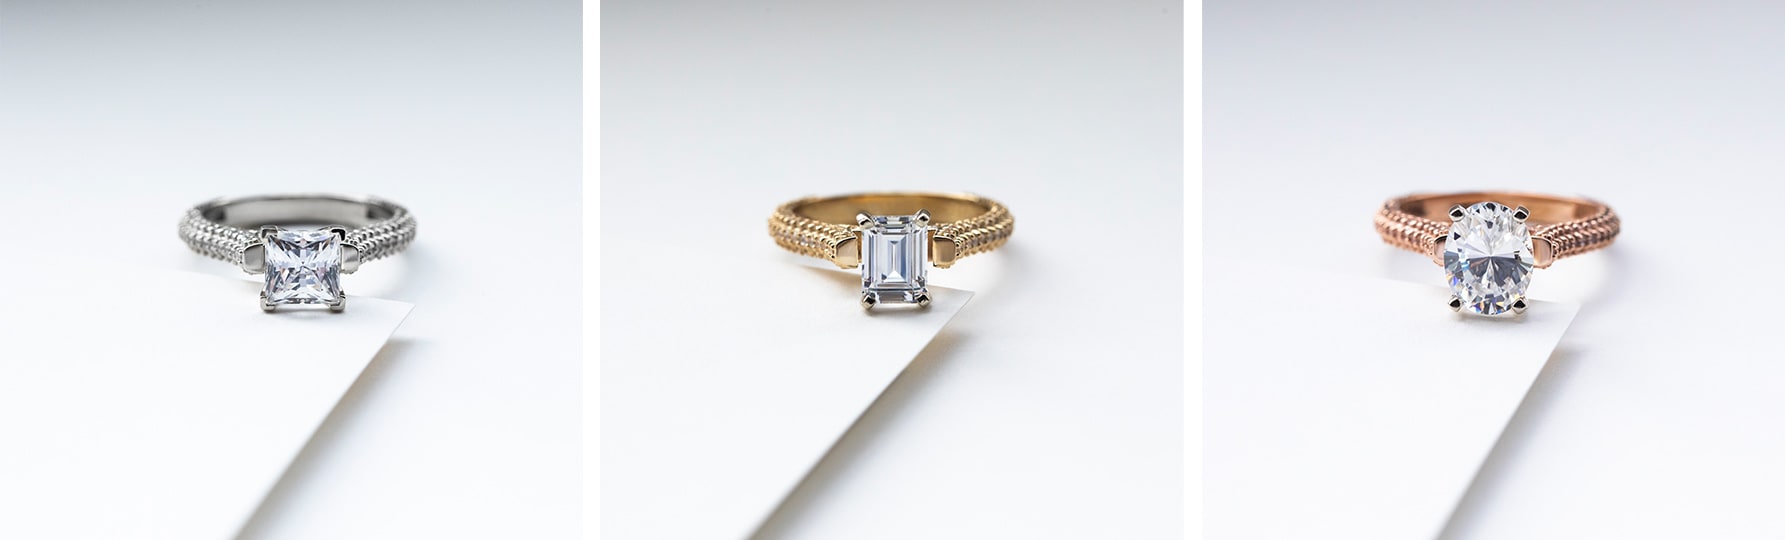 A princess cut pave engagement ring